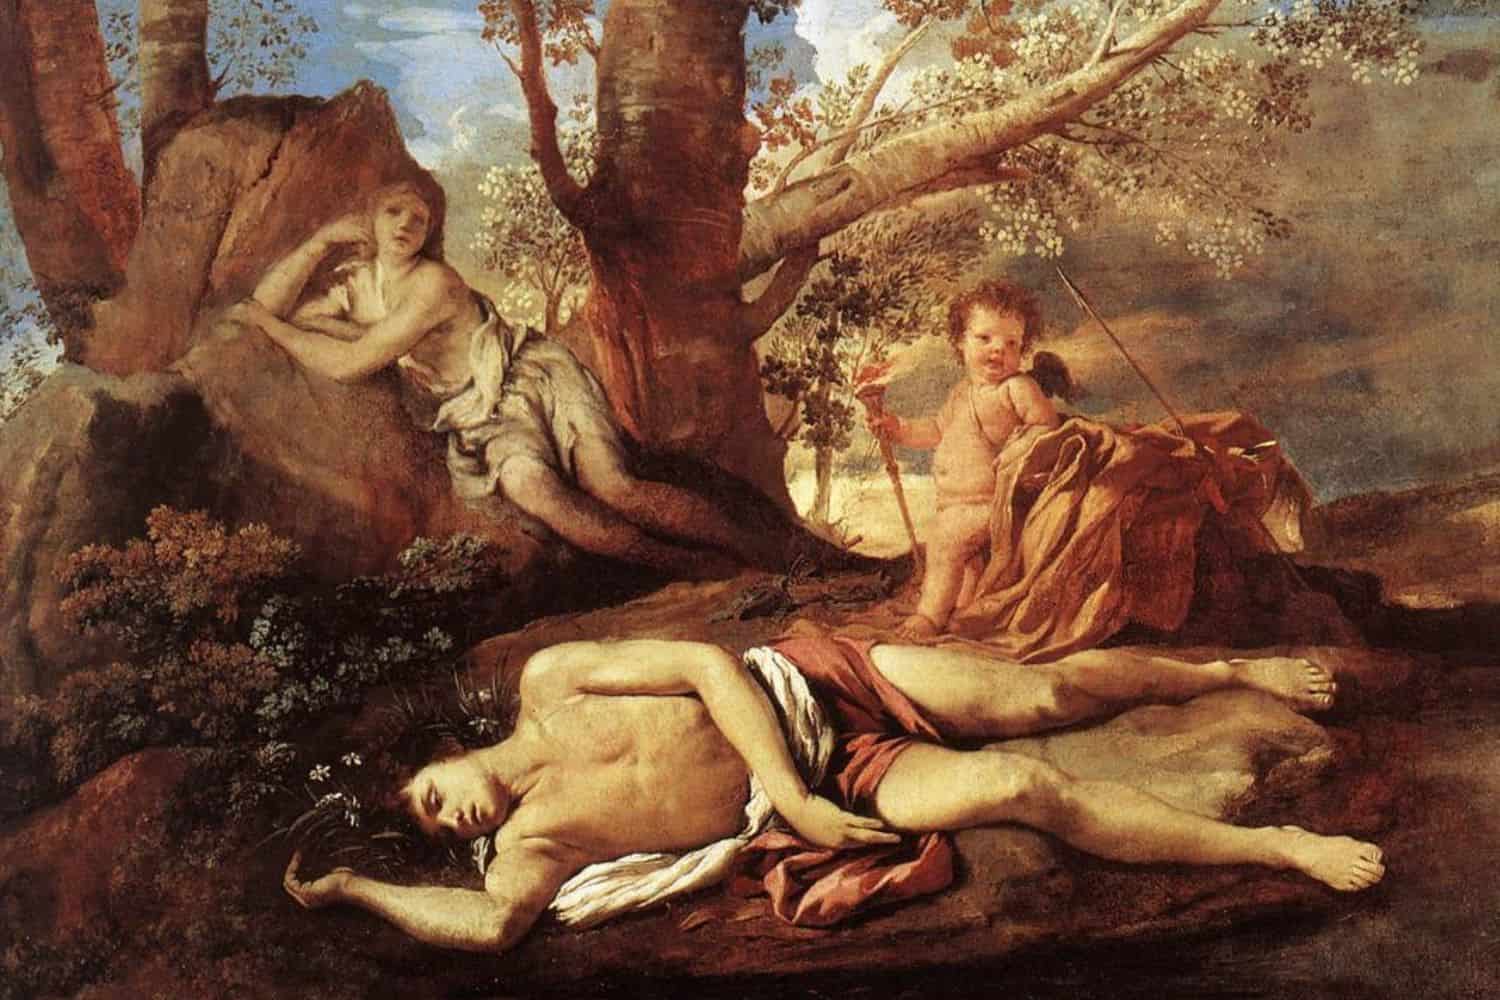 Narcissus and Echo Myth